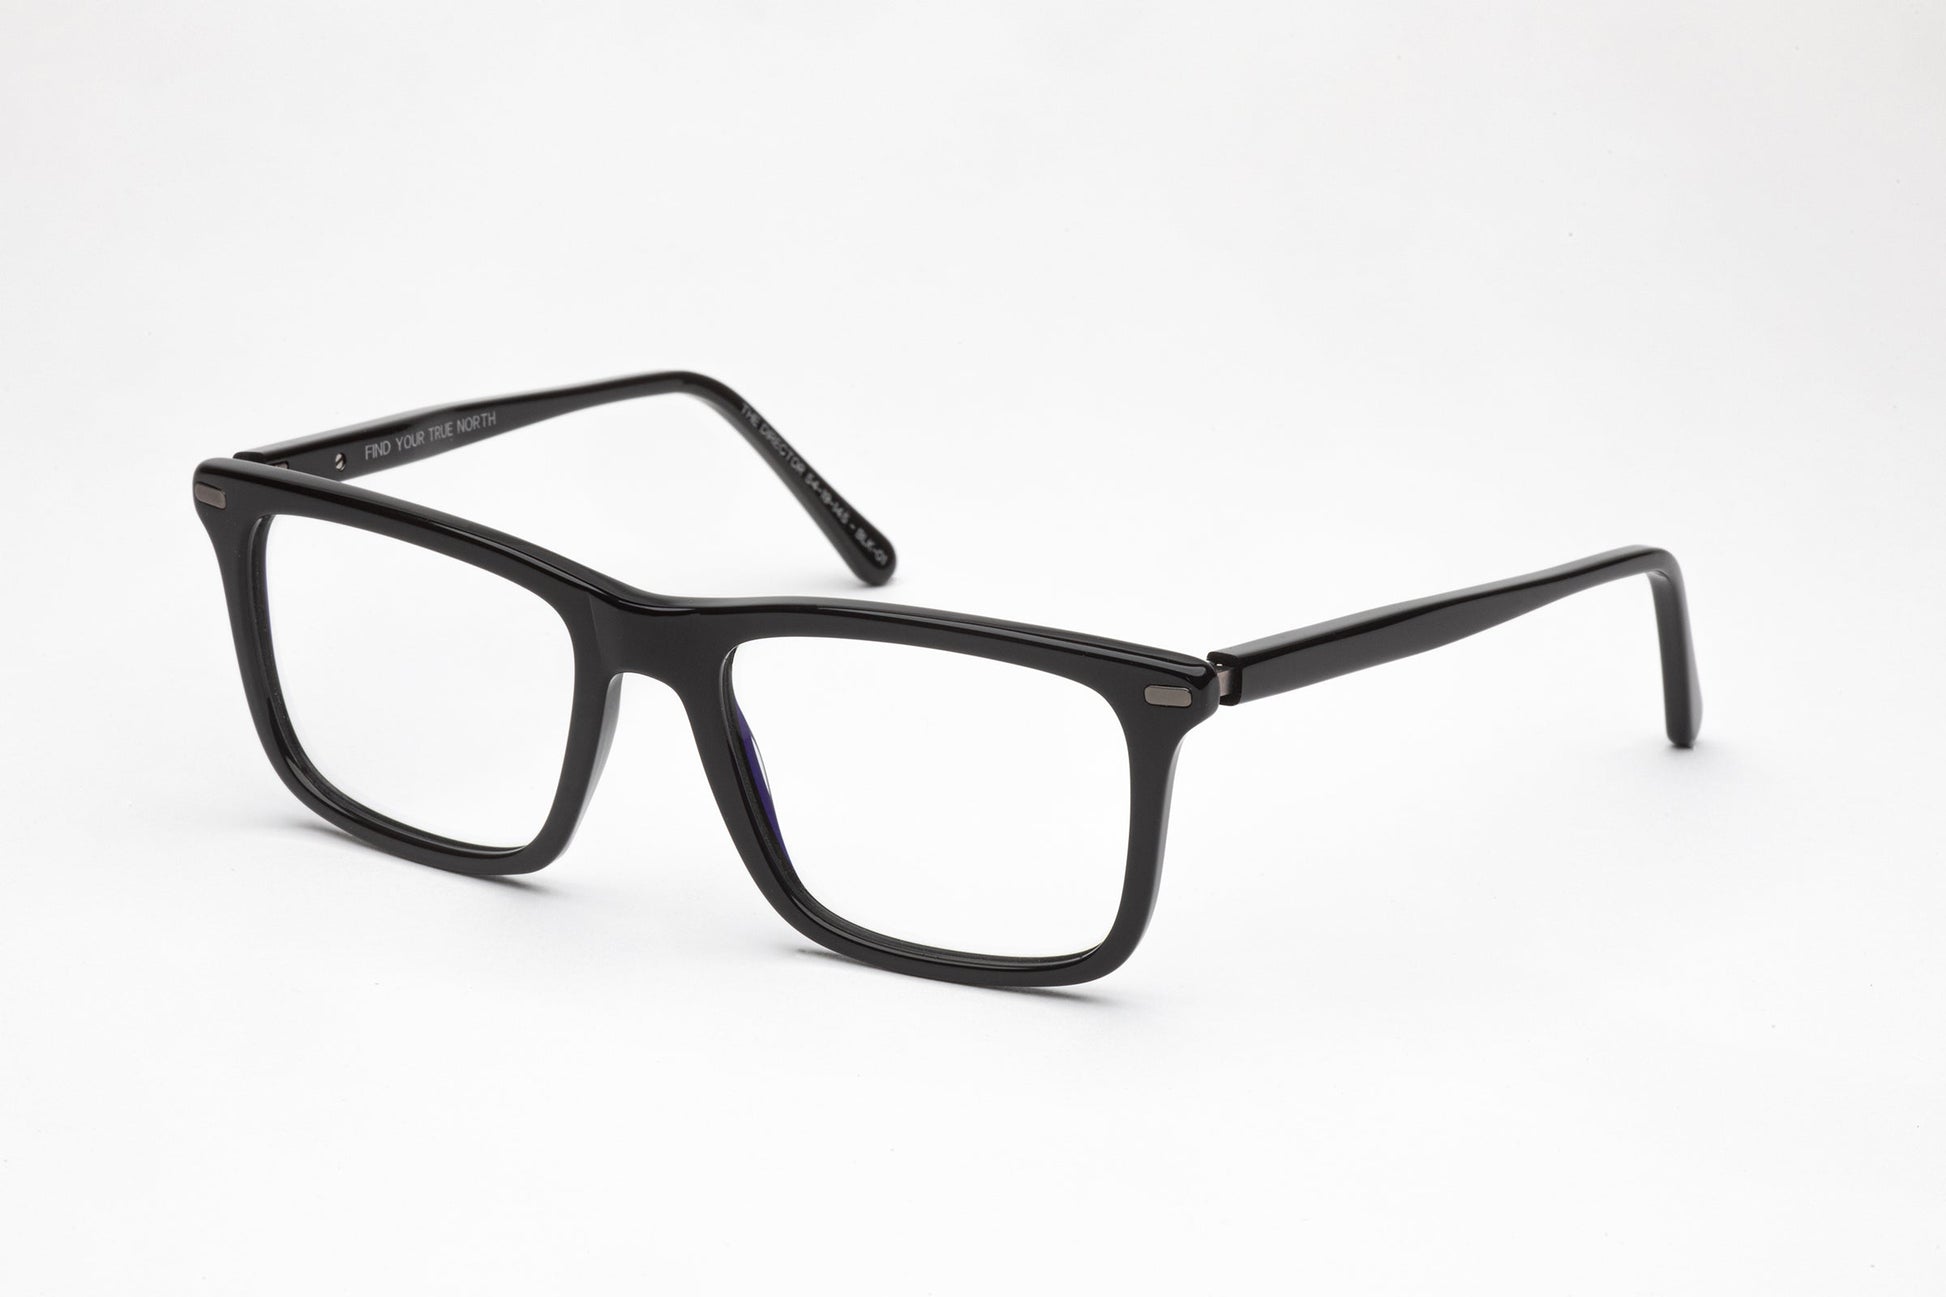 Angled View - The Director | Clear Frame Glasses - Designer Prescription Glasses with Oversized Rectangular Frames 